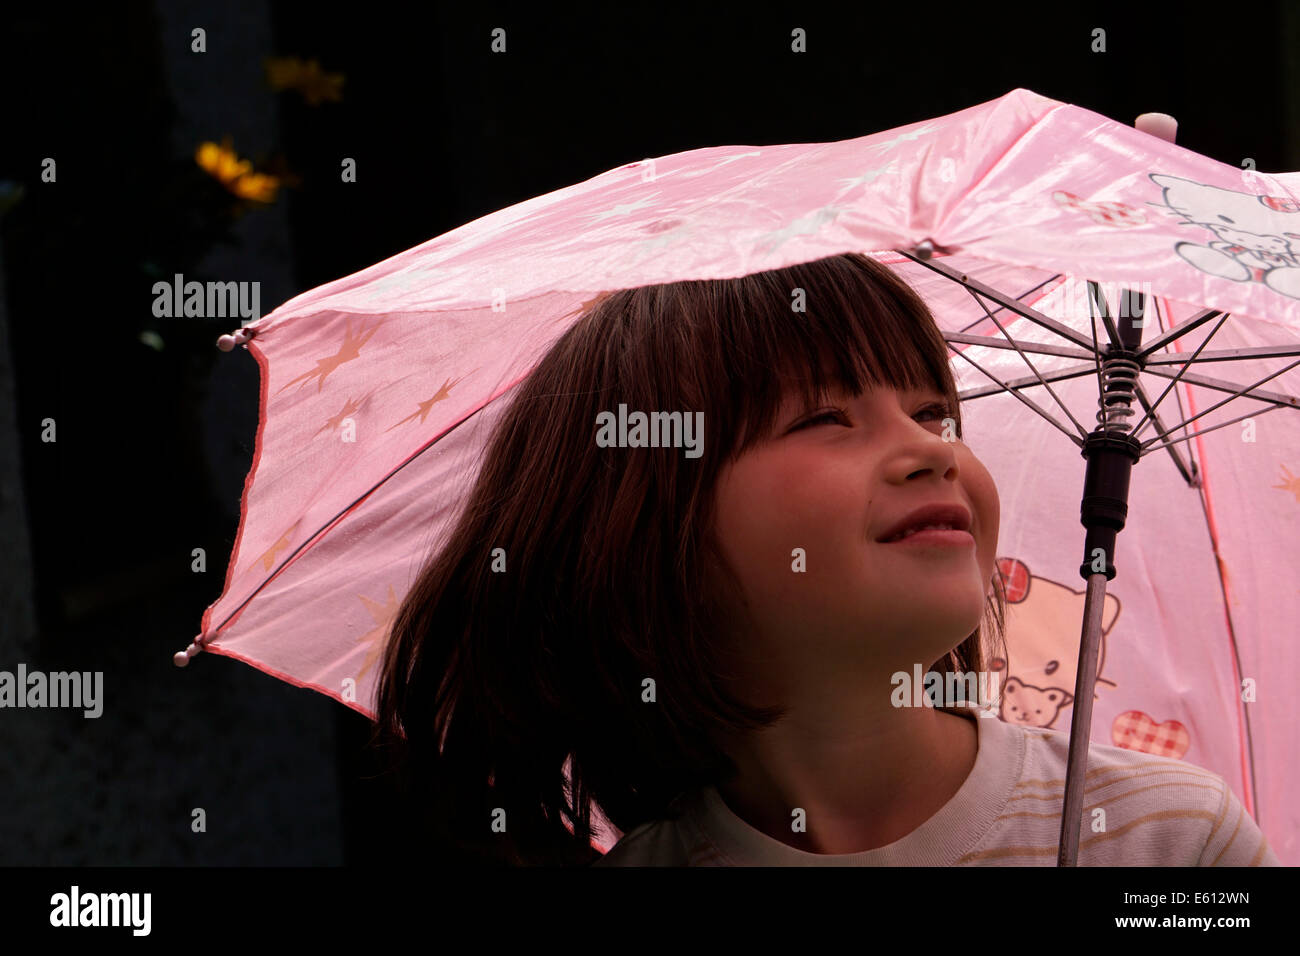 Young girl under pink umbrella Stock Photo